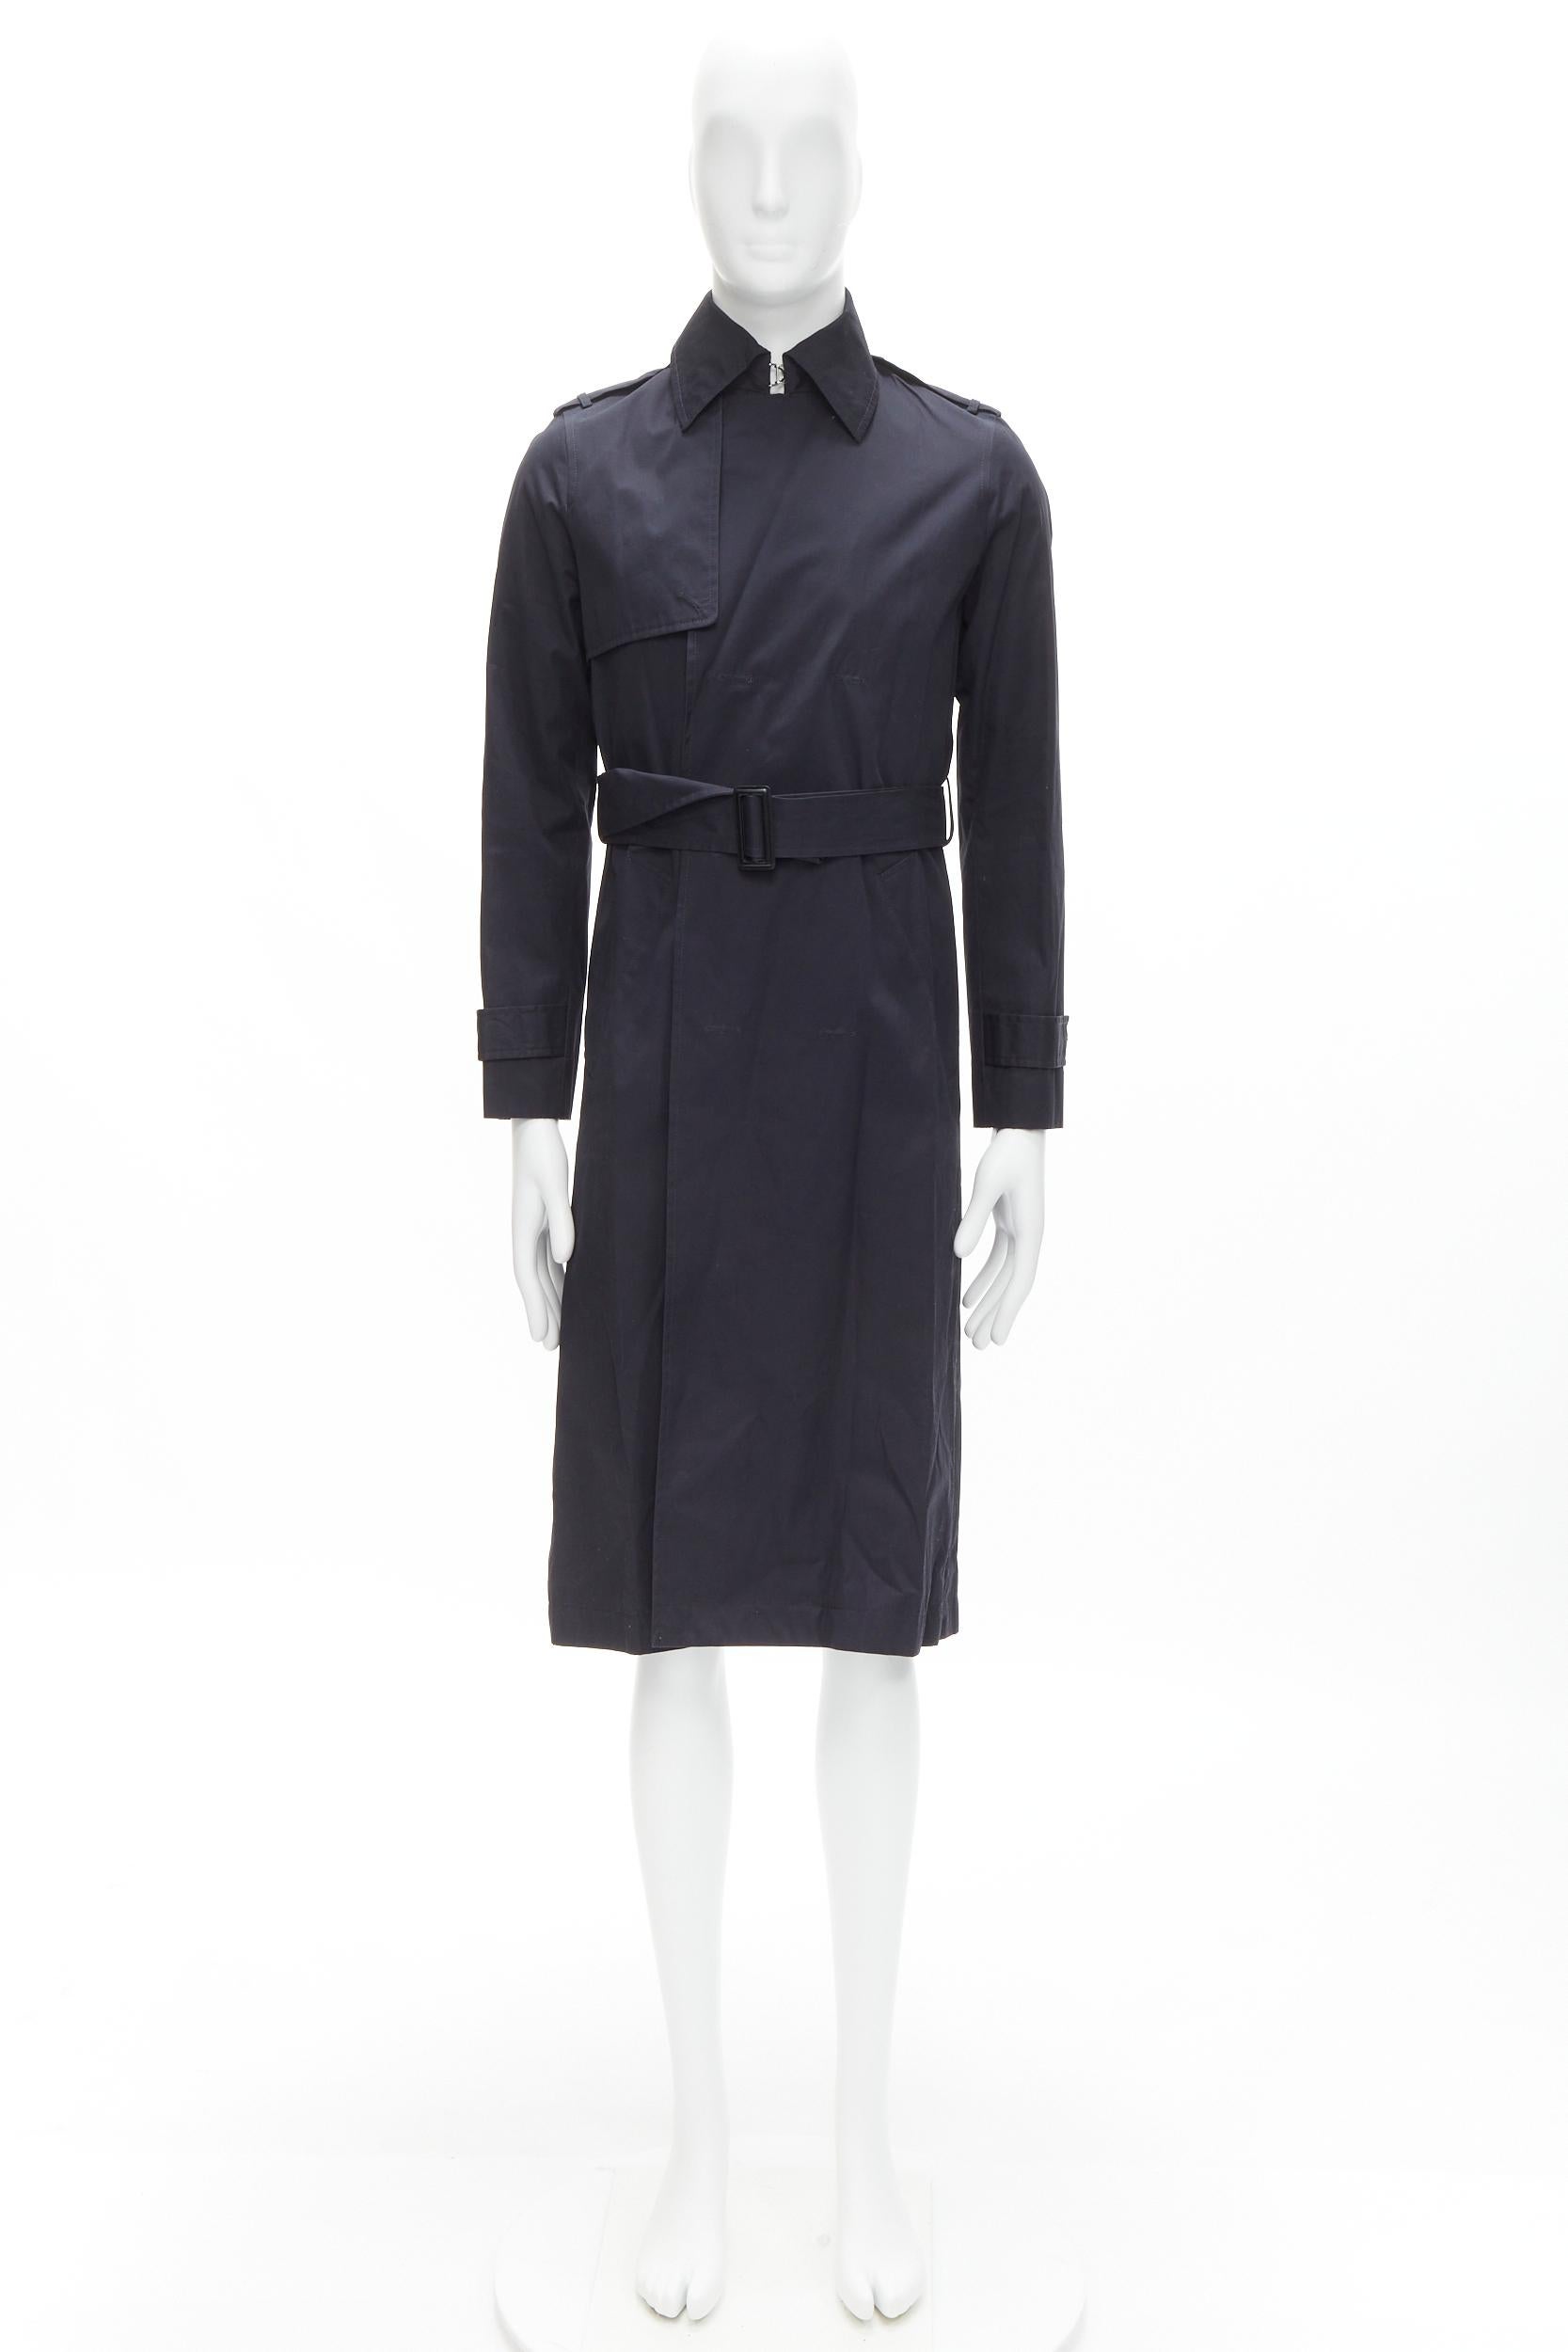 BALENCIAGA DEMNA - Trench-coat en coton bleu marine à boutons fermés et ceinture FR46 S, 2016 6